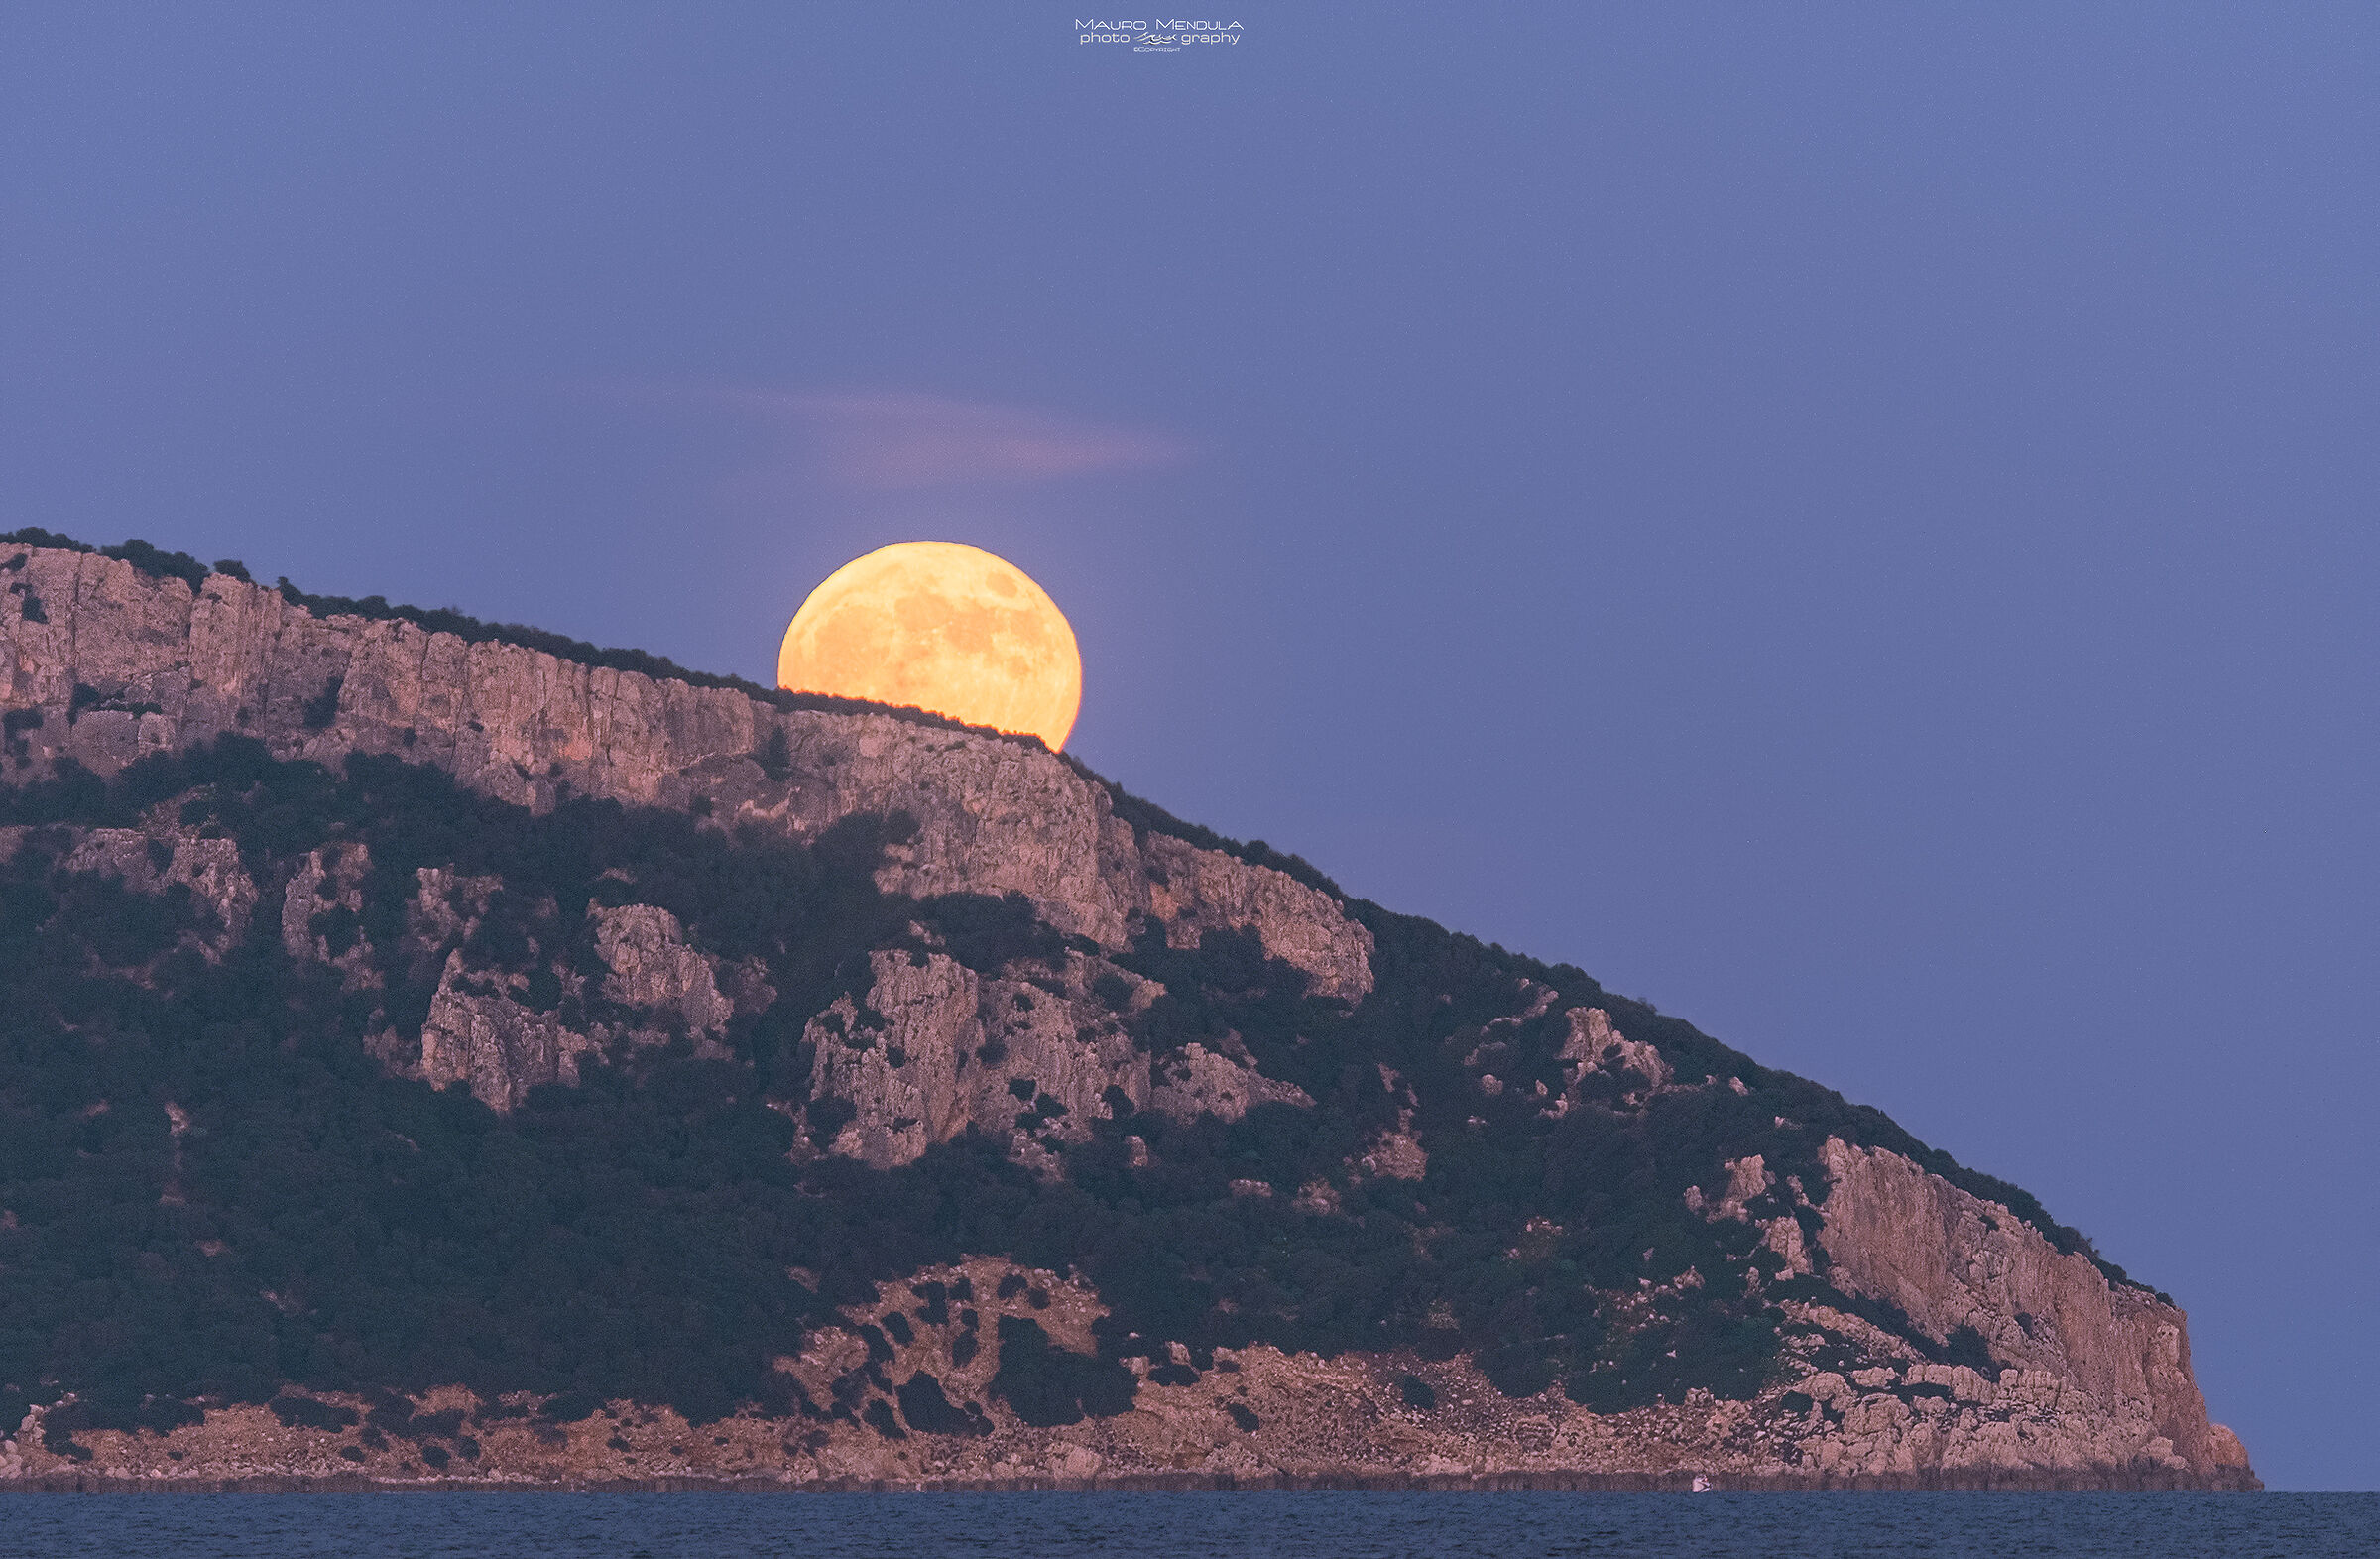 Figarolo (Golfo Aranci) e la luna piena...